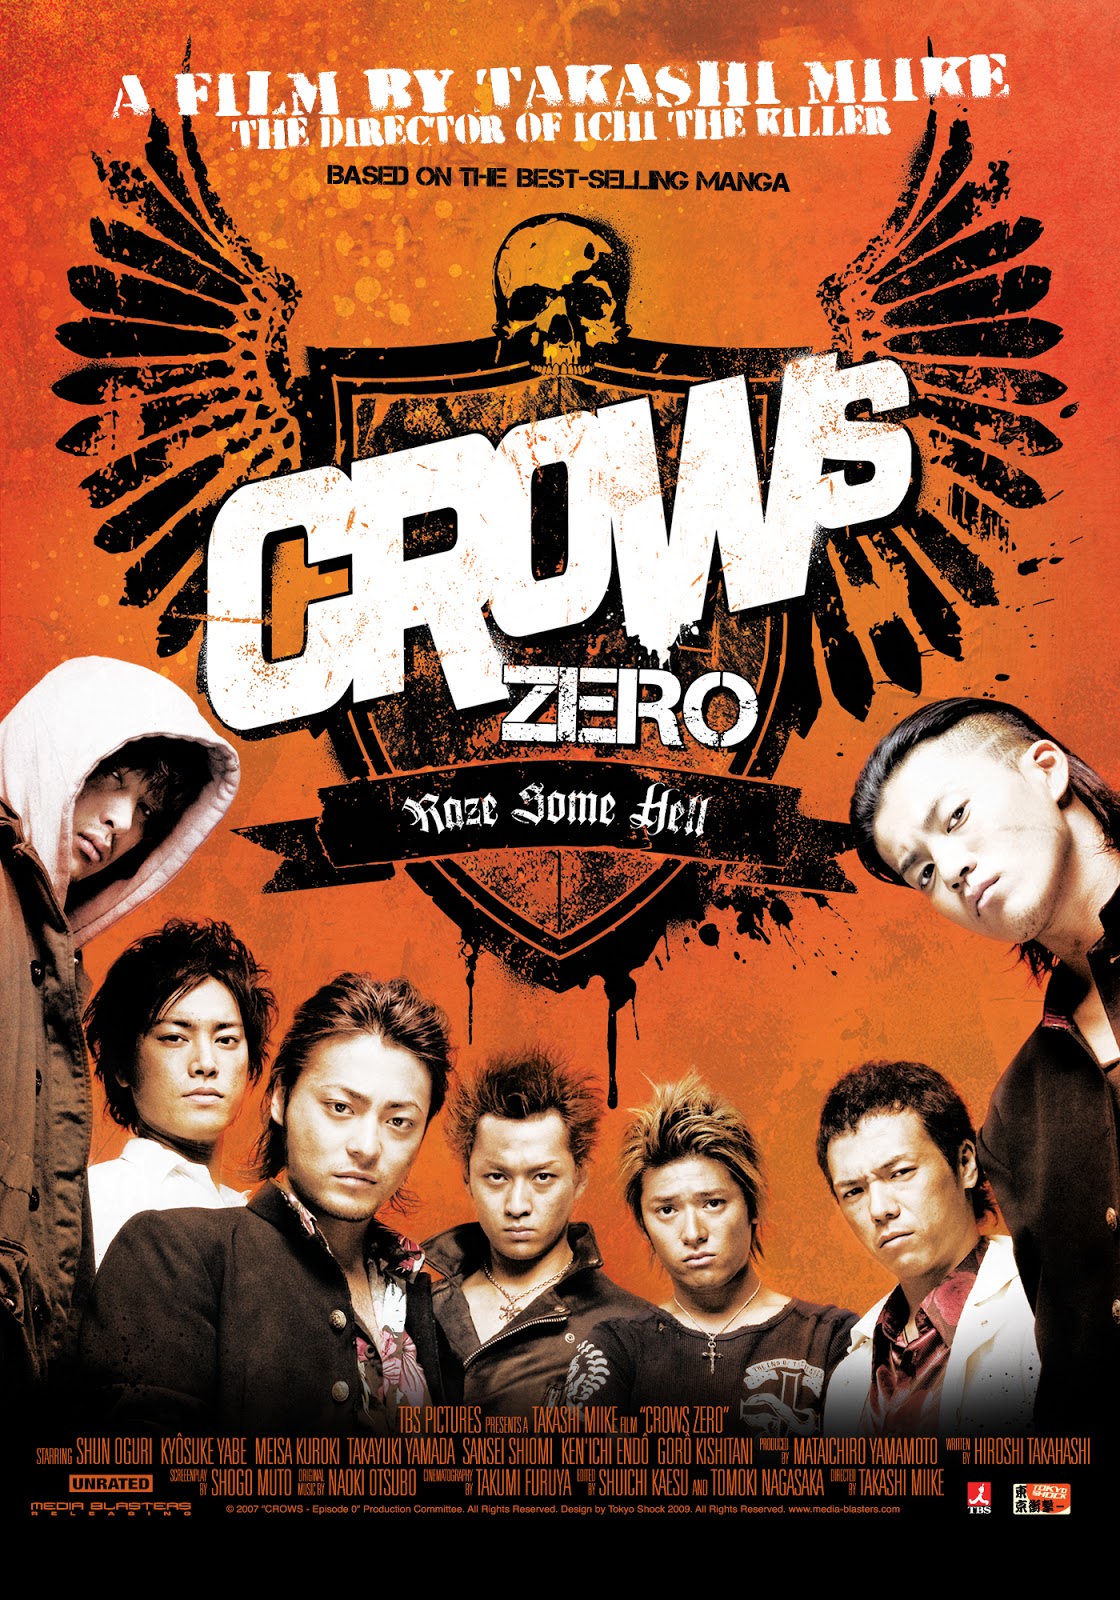 download crows zero sub indo